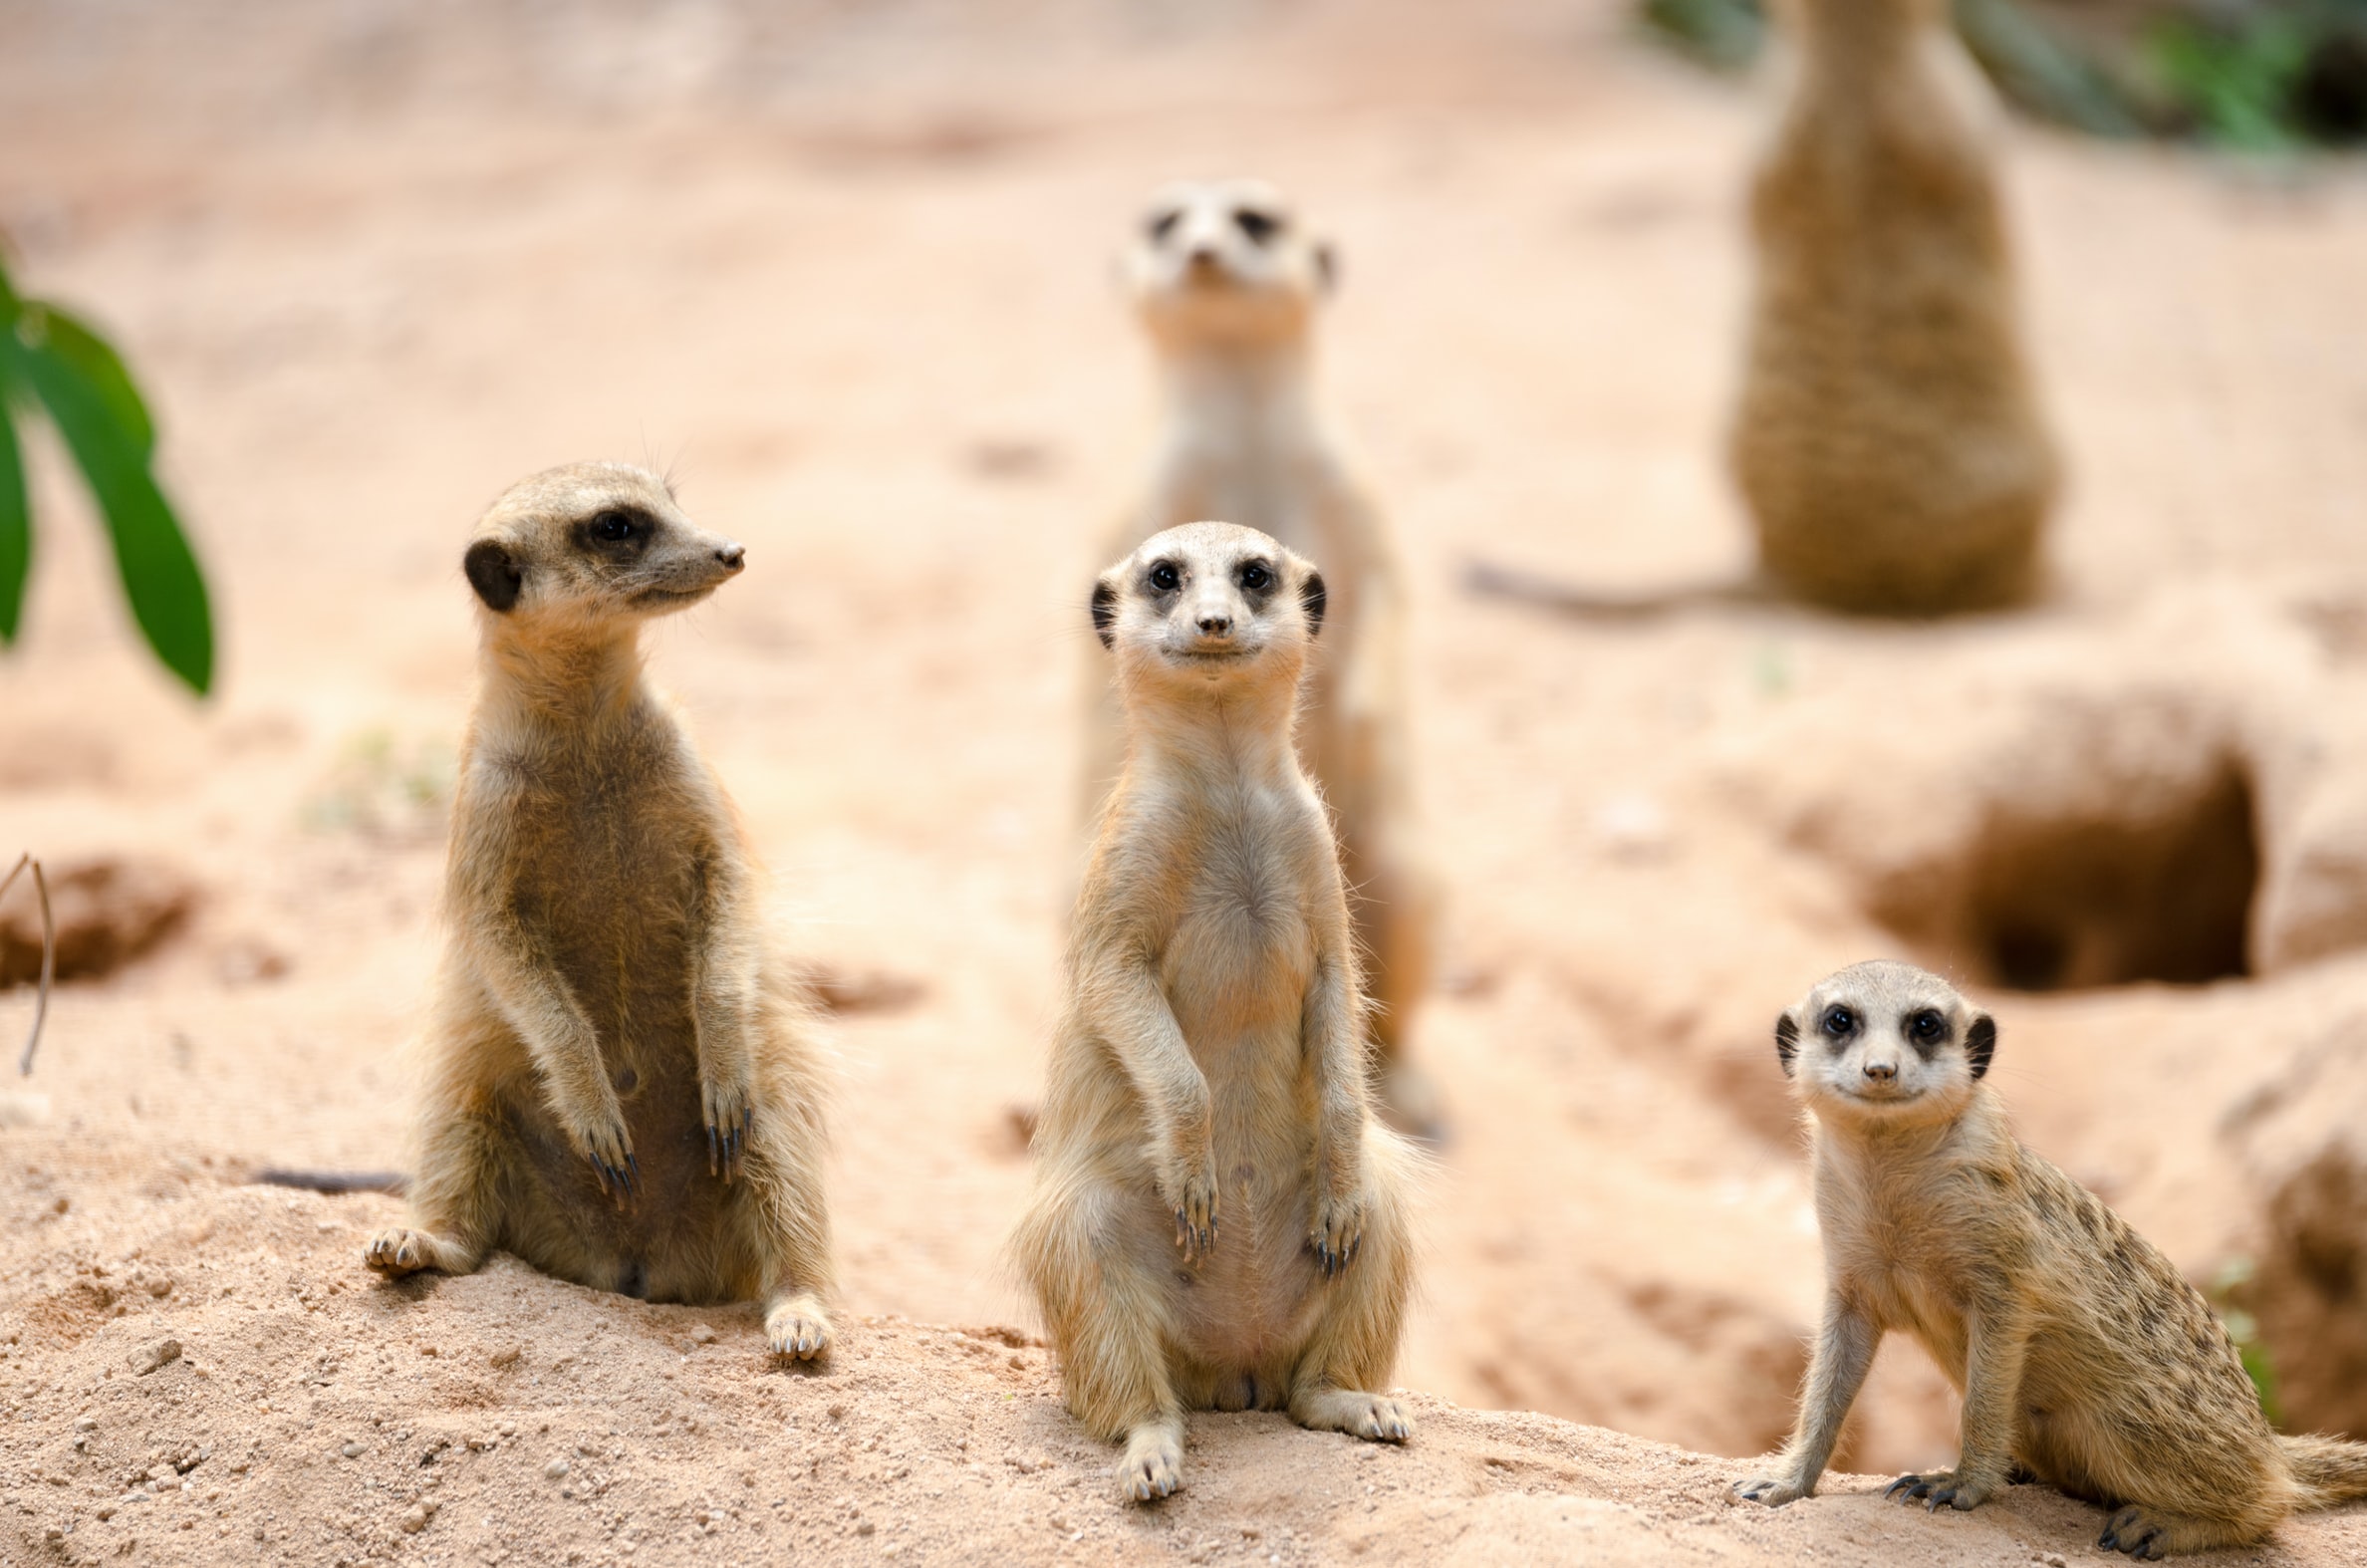 meerkats doing a team building activity